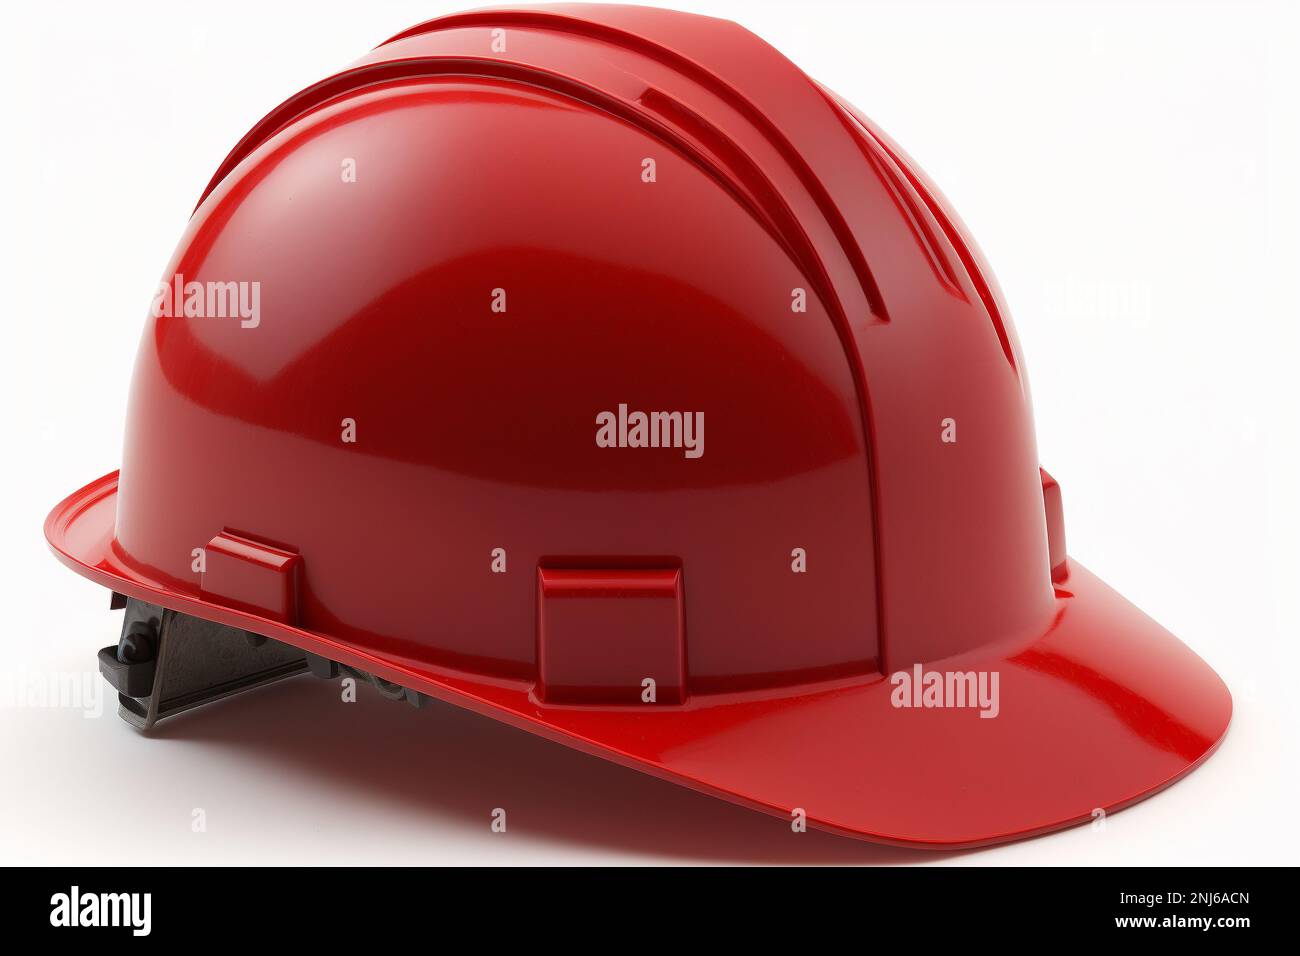 Red helmet on white background Stock Photo